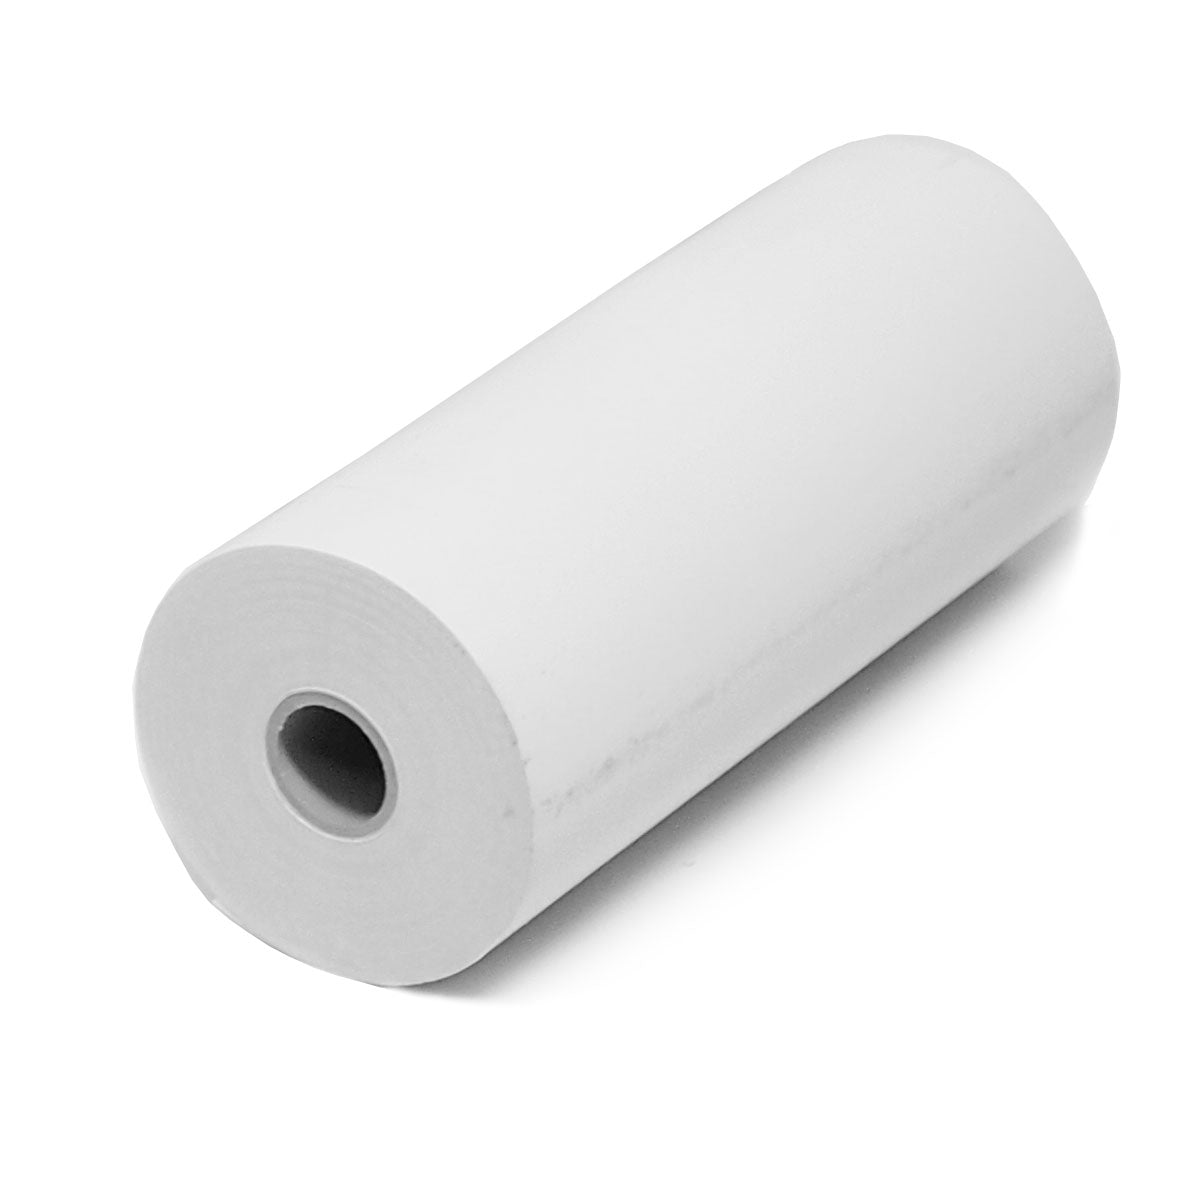 Thermal Printer Paper for MicroLab Spirometer x 5